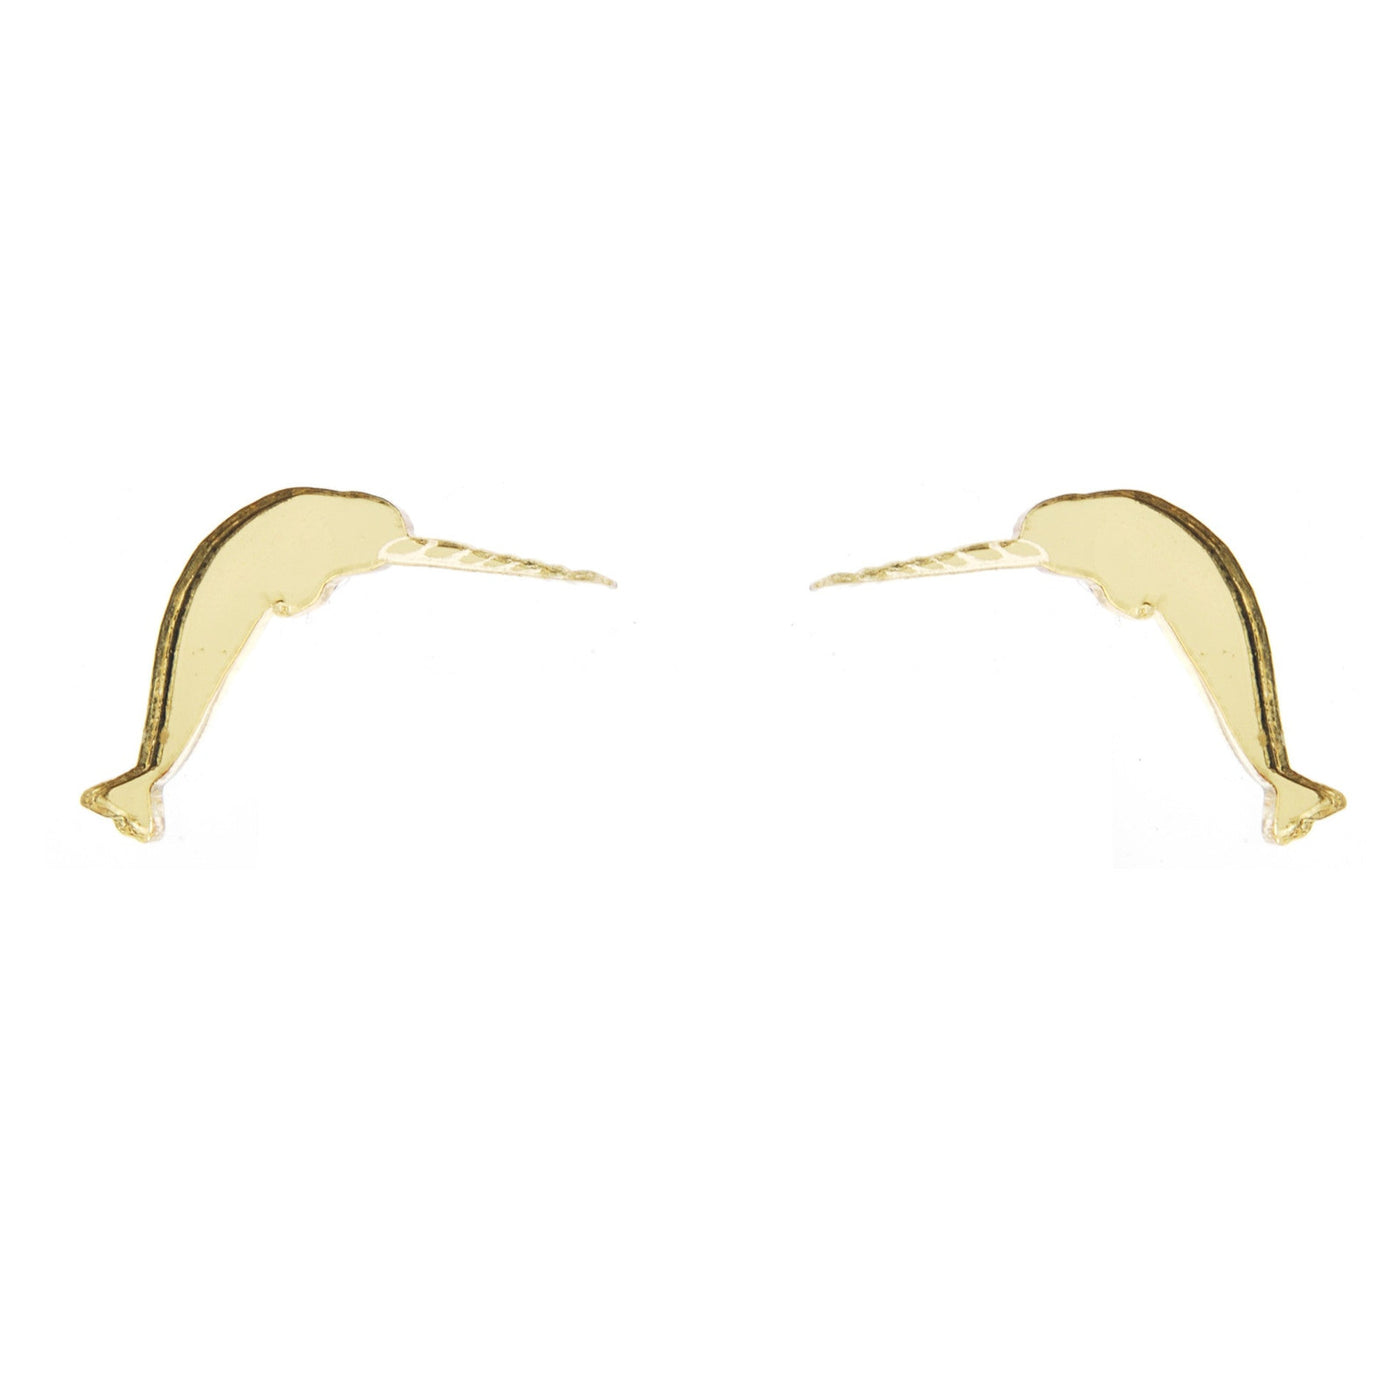 Narwhal Earrings in Mirror Gold